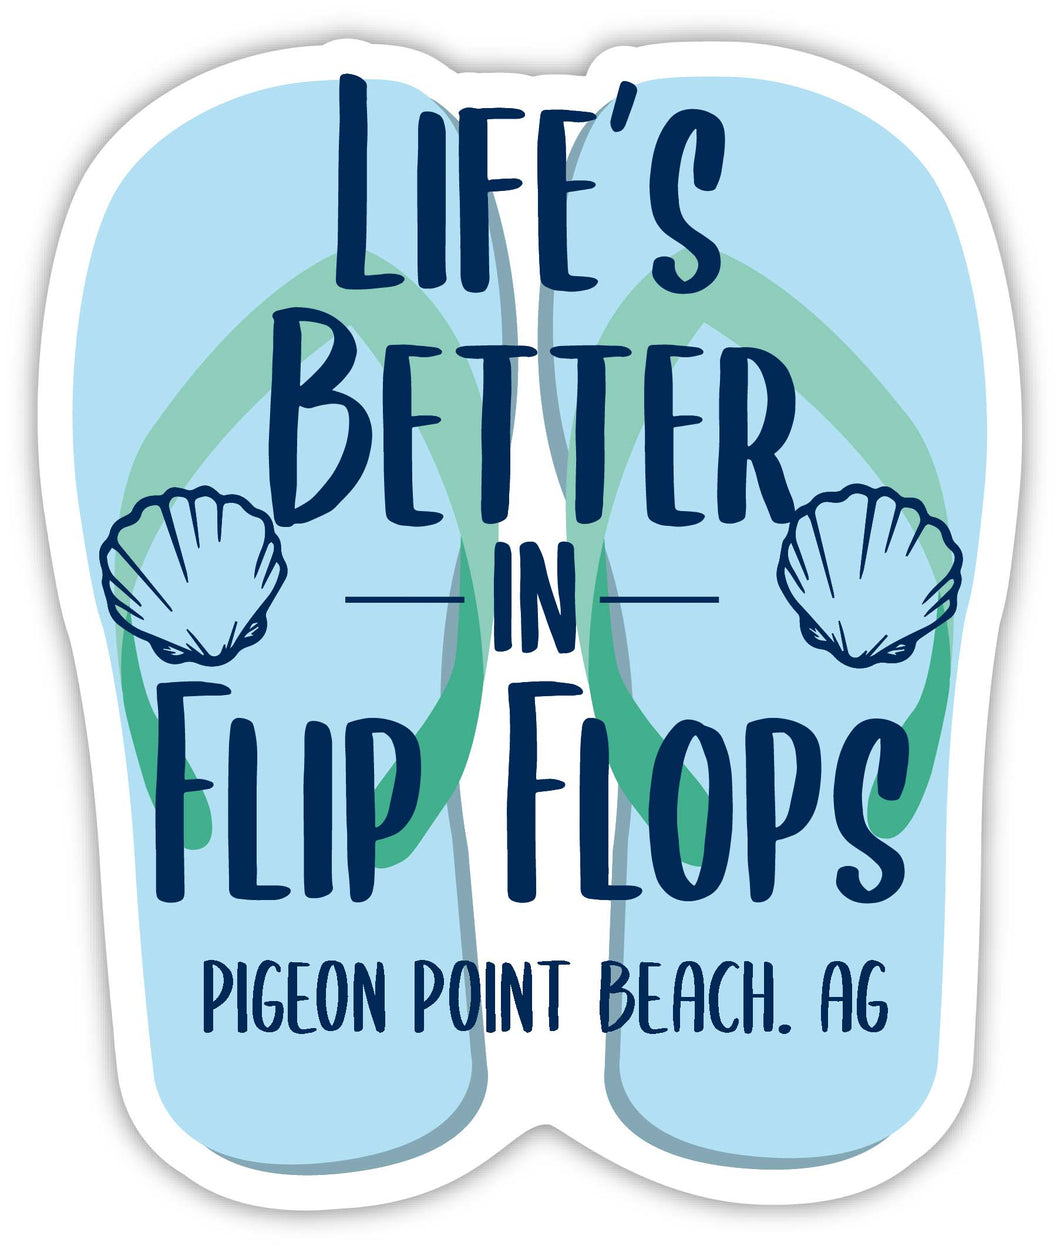 Pigeon Point Beach Antigua And Barbuda Souvenir 4 Inch Vinyl Decal Sticker Flip Flop Design